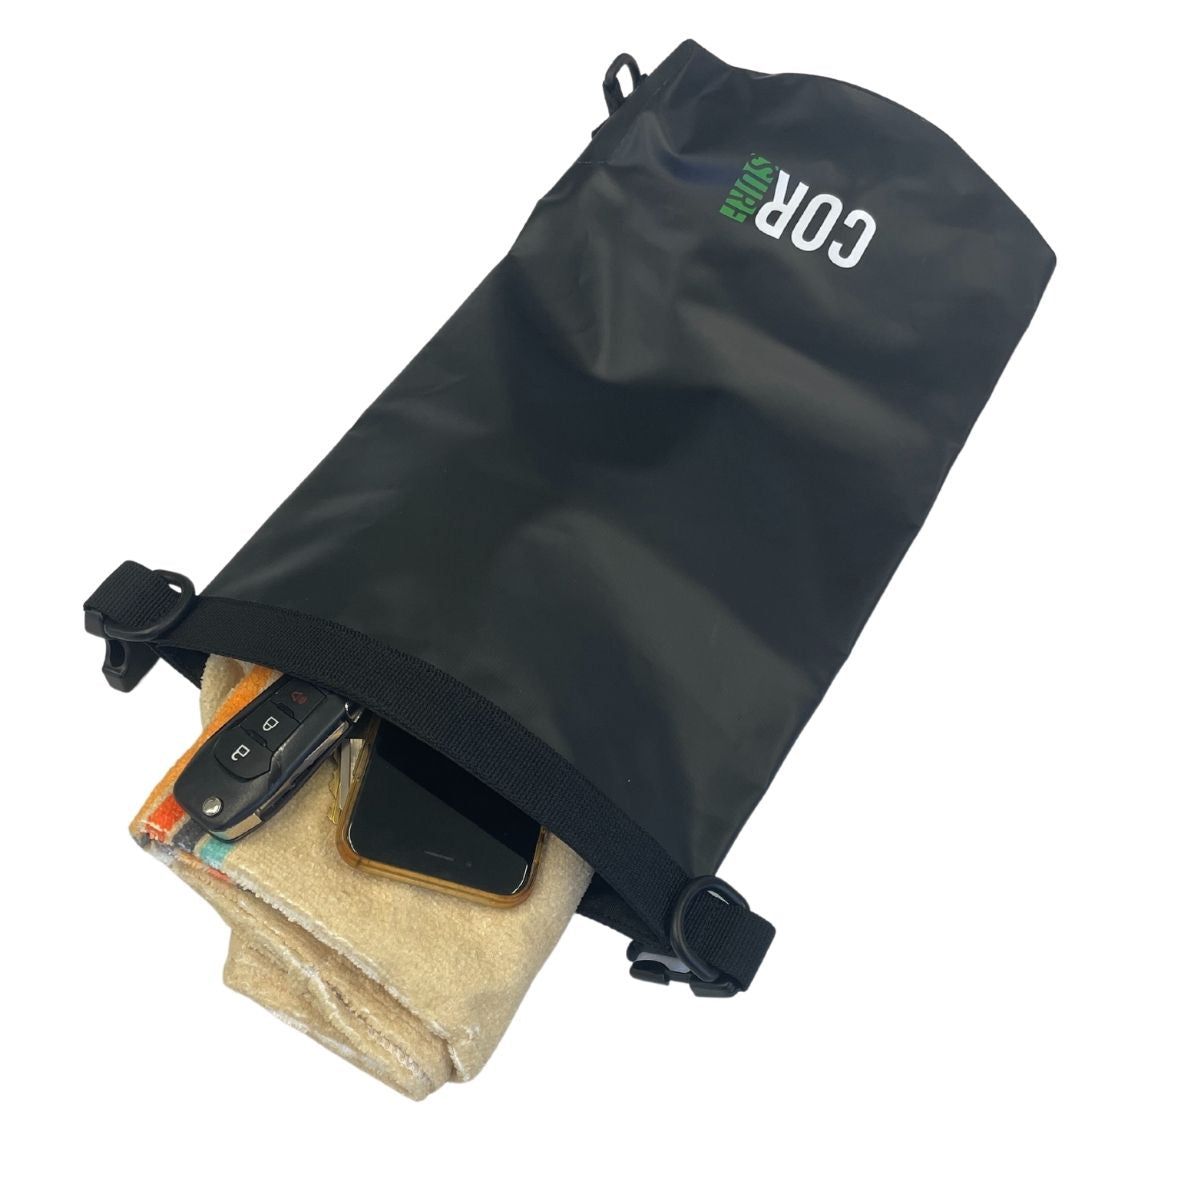 waterproof rolltop dry bag sack 3l 5l 10l